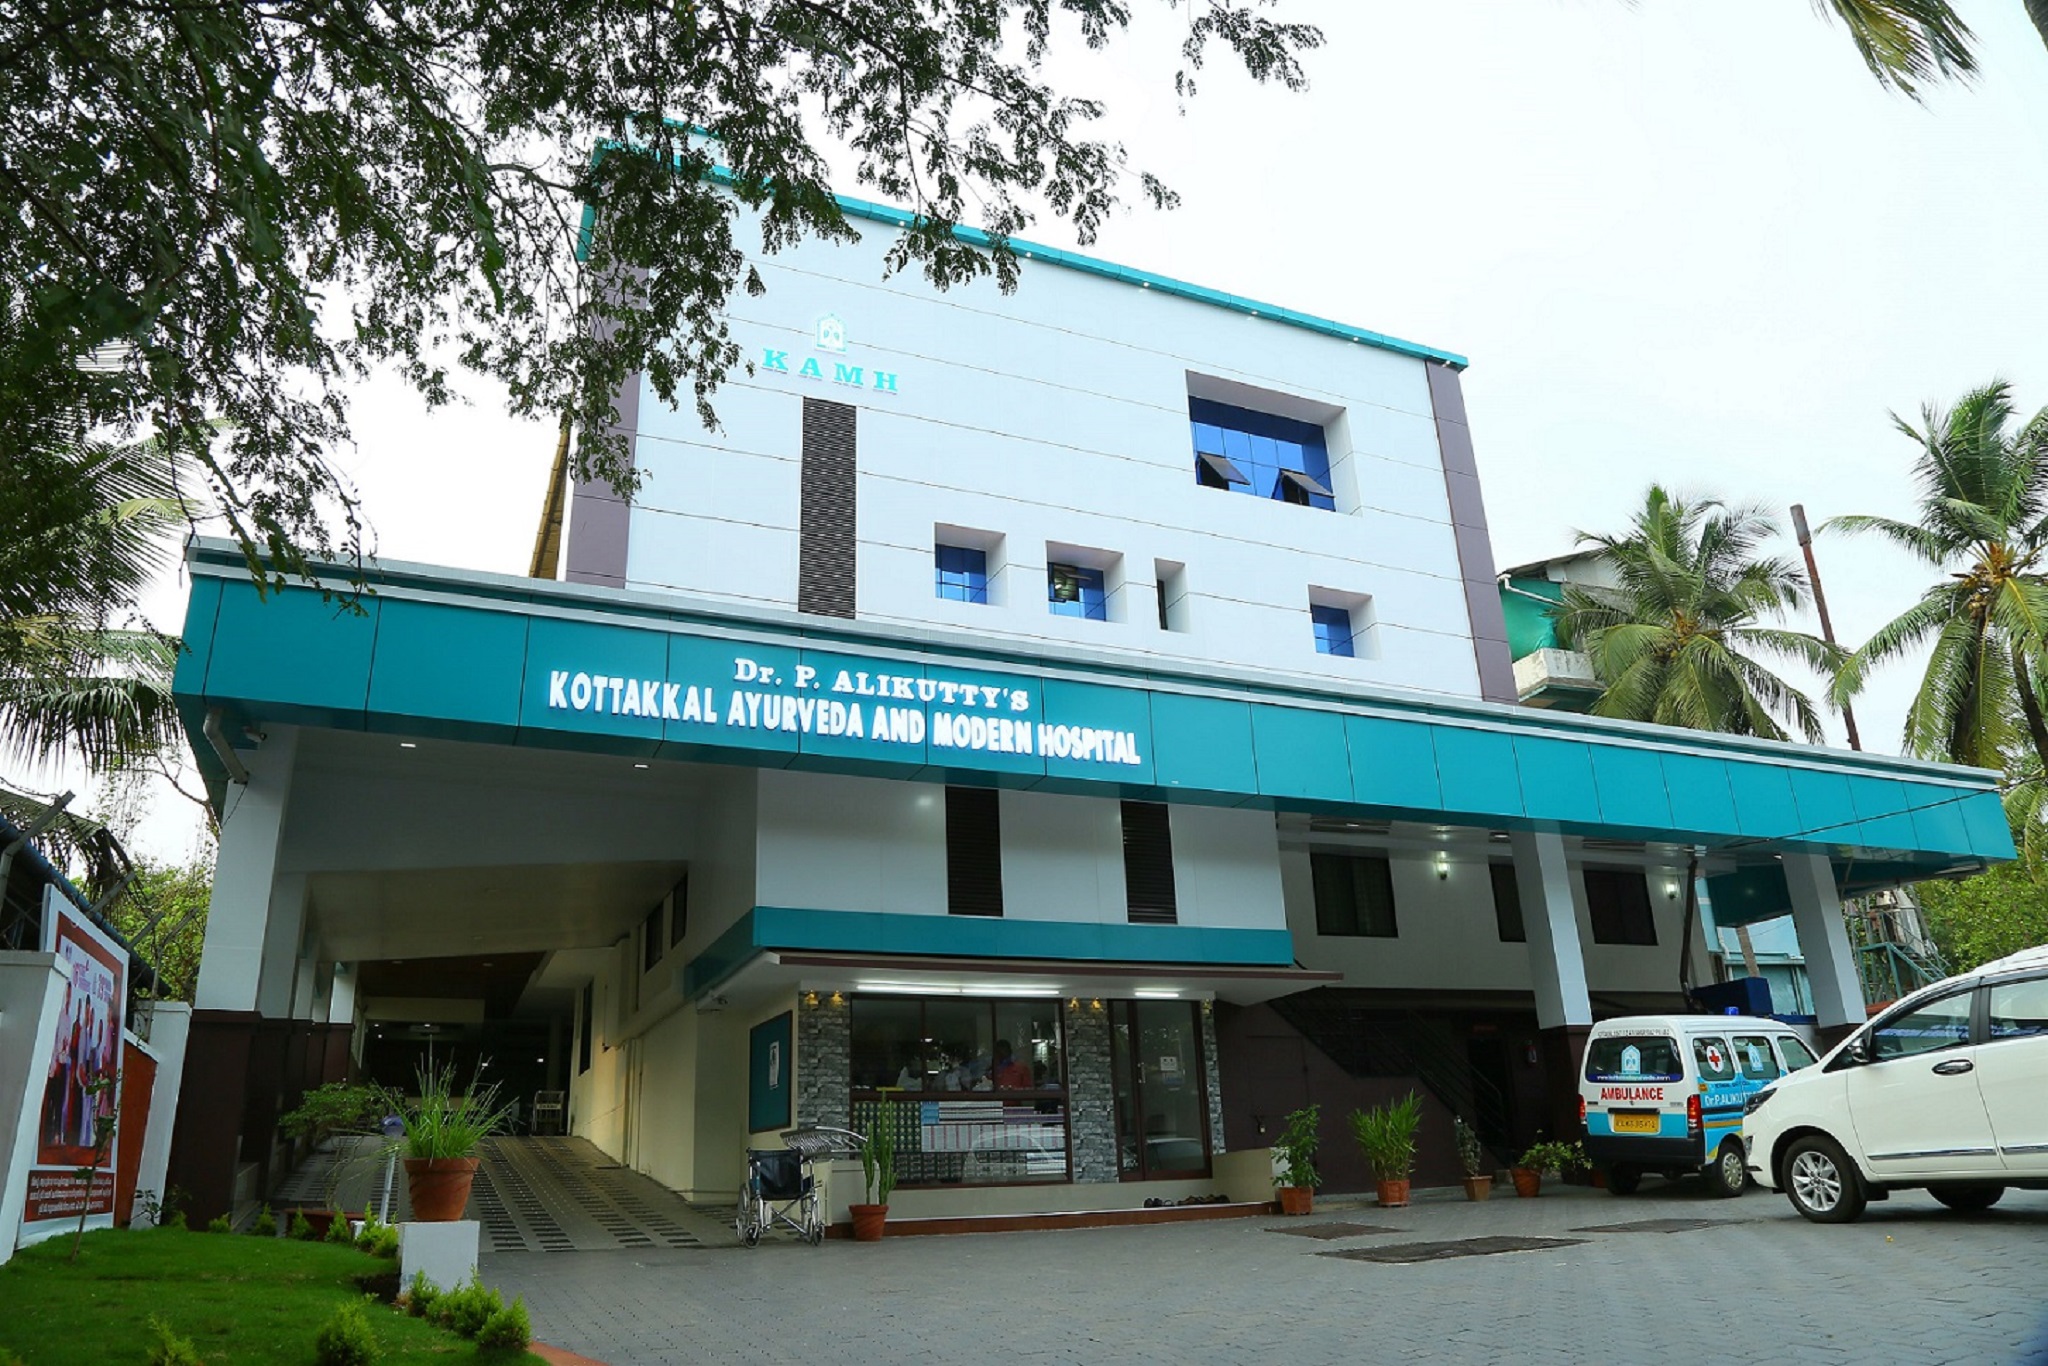 Dr P Alikuttys Kottakkal Ayurveda & Modern Hospital – Kottakkal